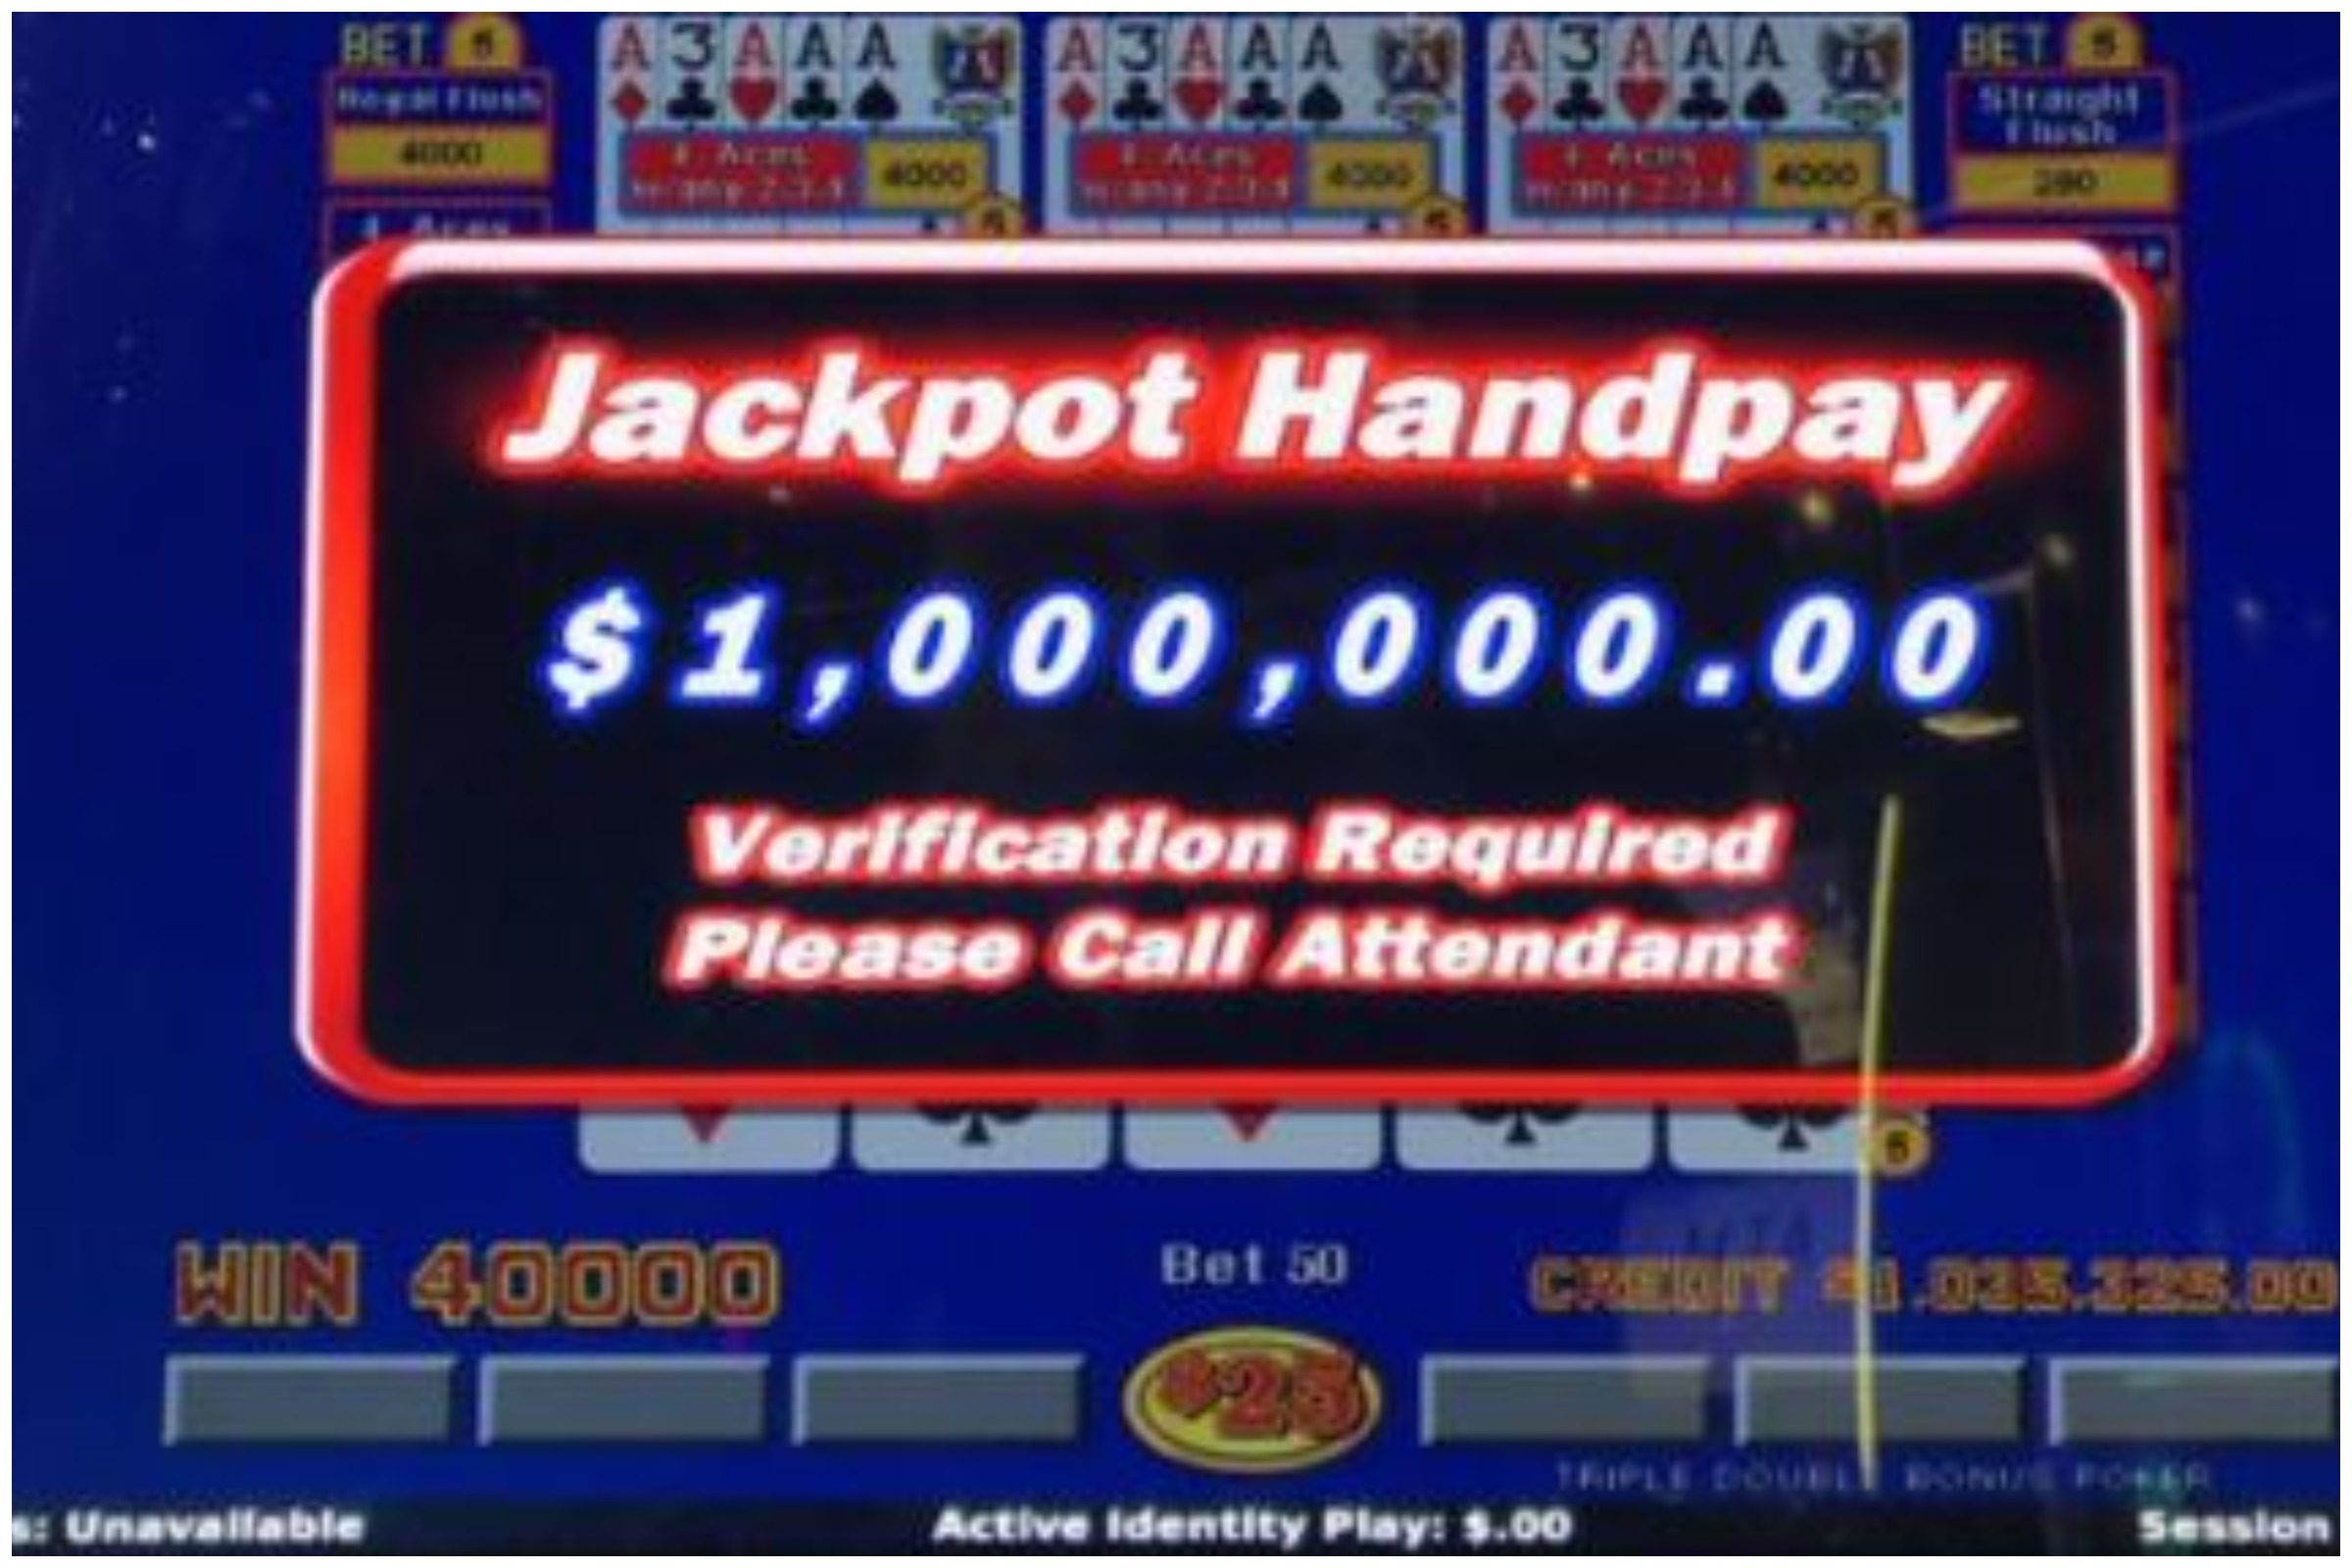 Las Vegas Gambler Wins 'Record' 1 Million Jackpot on Labor Day